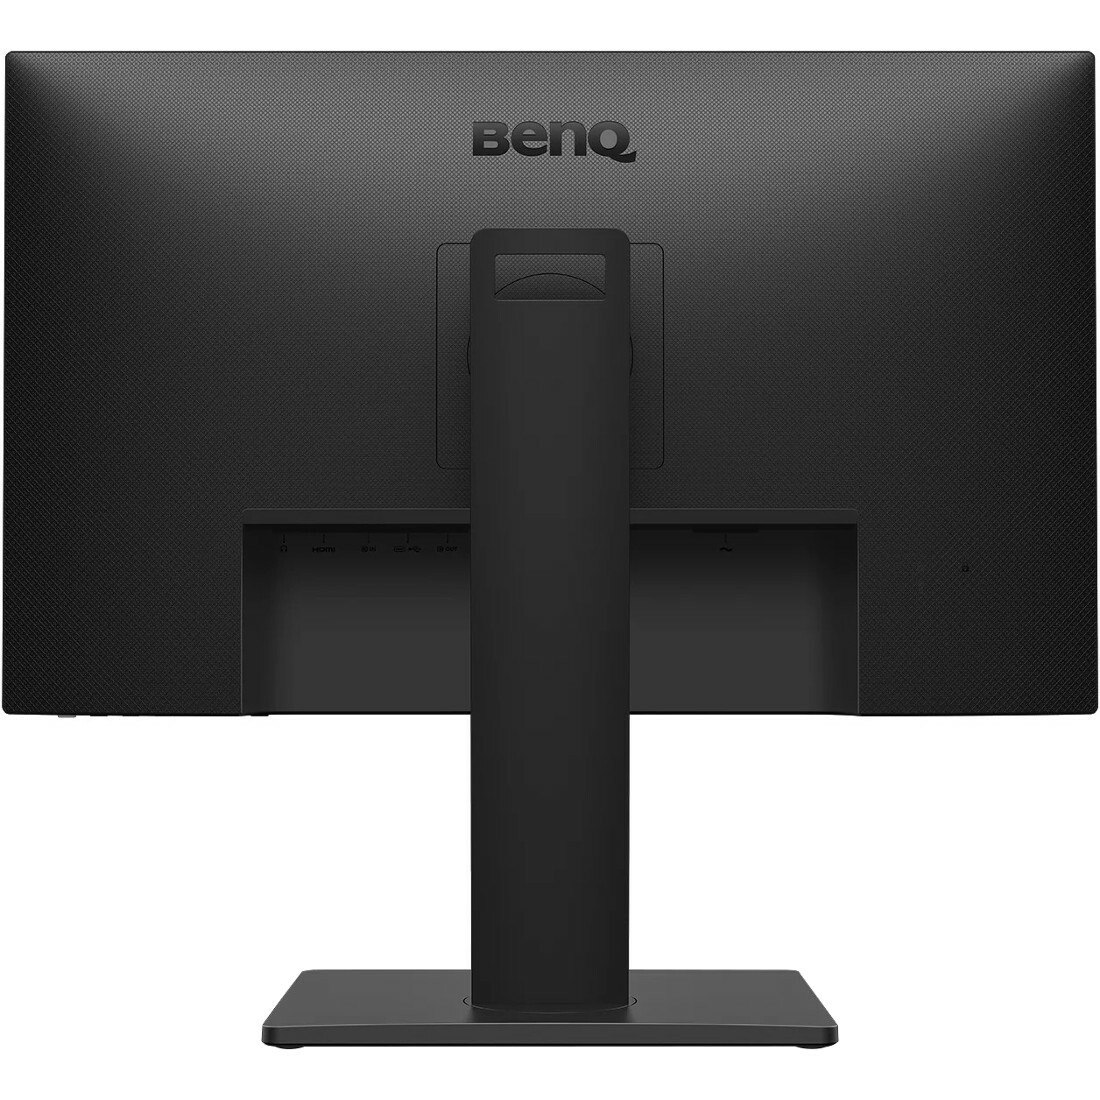 BenQ GW2785TC 27" Full HD LED LCD Monitor - 16:9 - Black